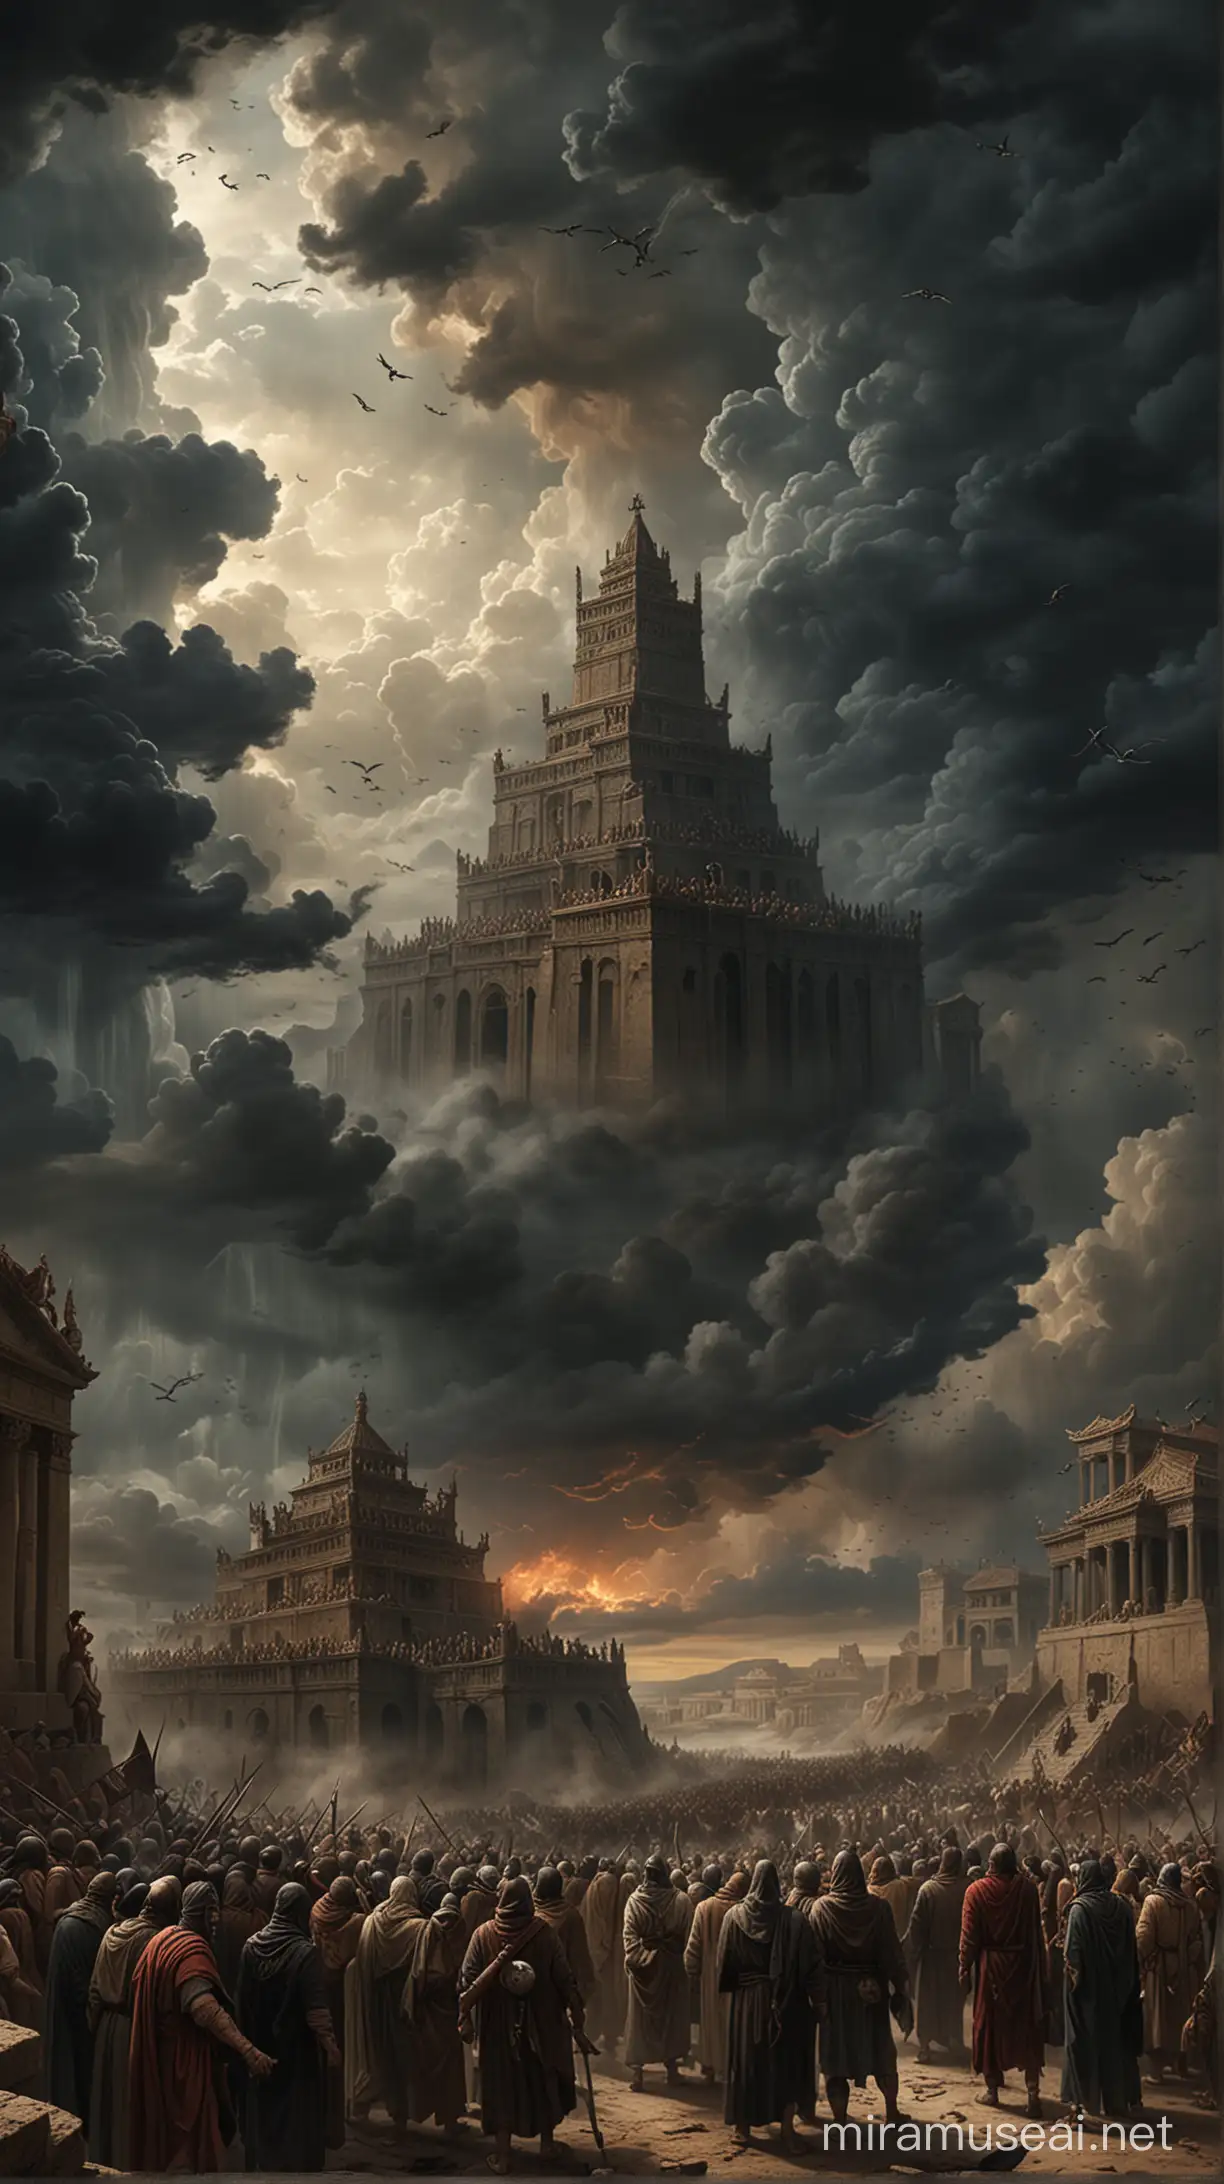 Ancient World Deeds of Evil under Ominous Skies